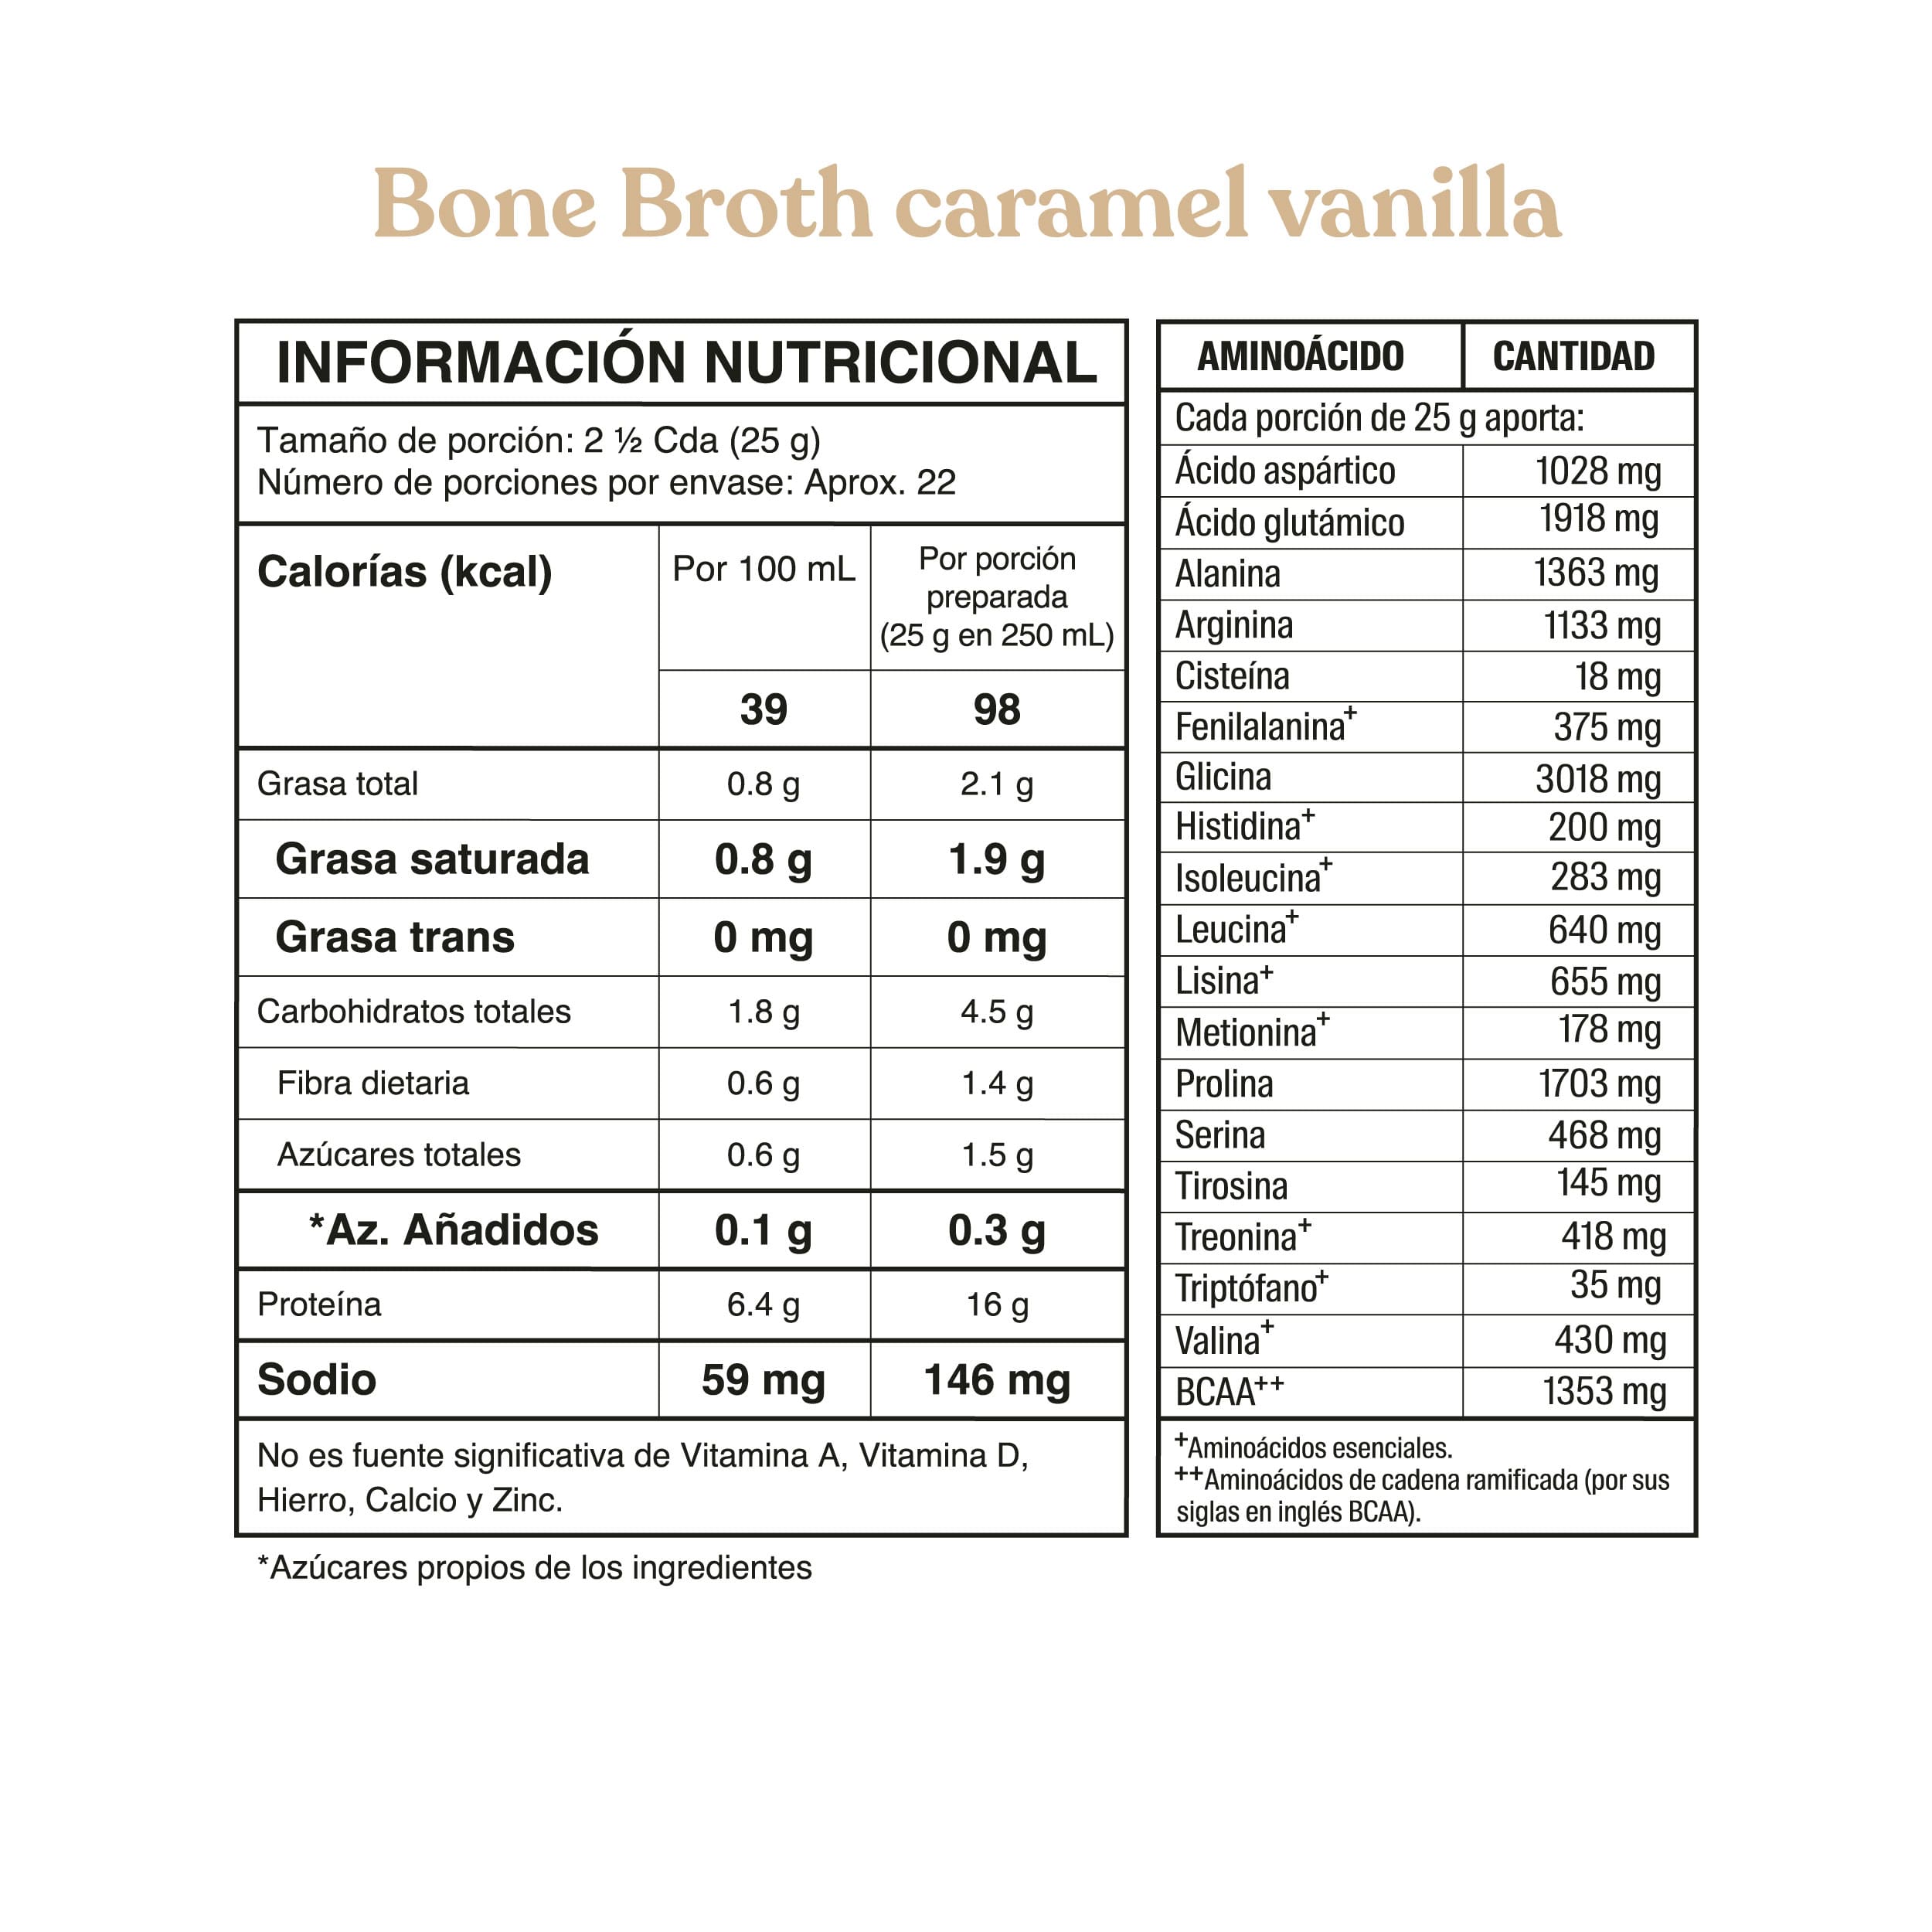 Bone Broth Power® caramel vanilla